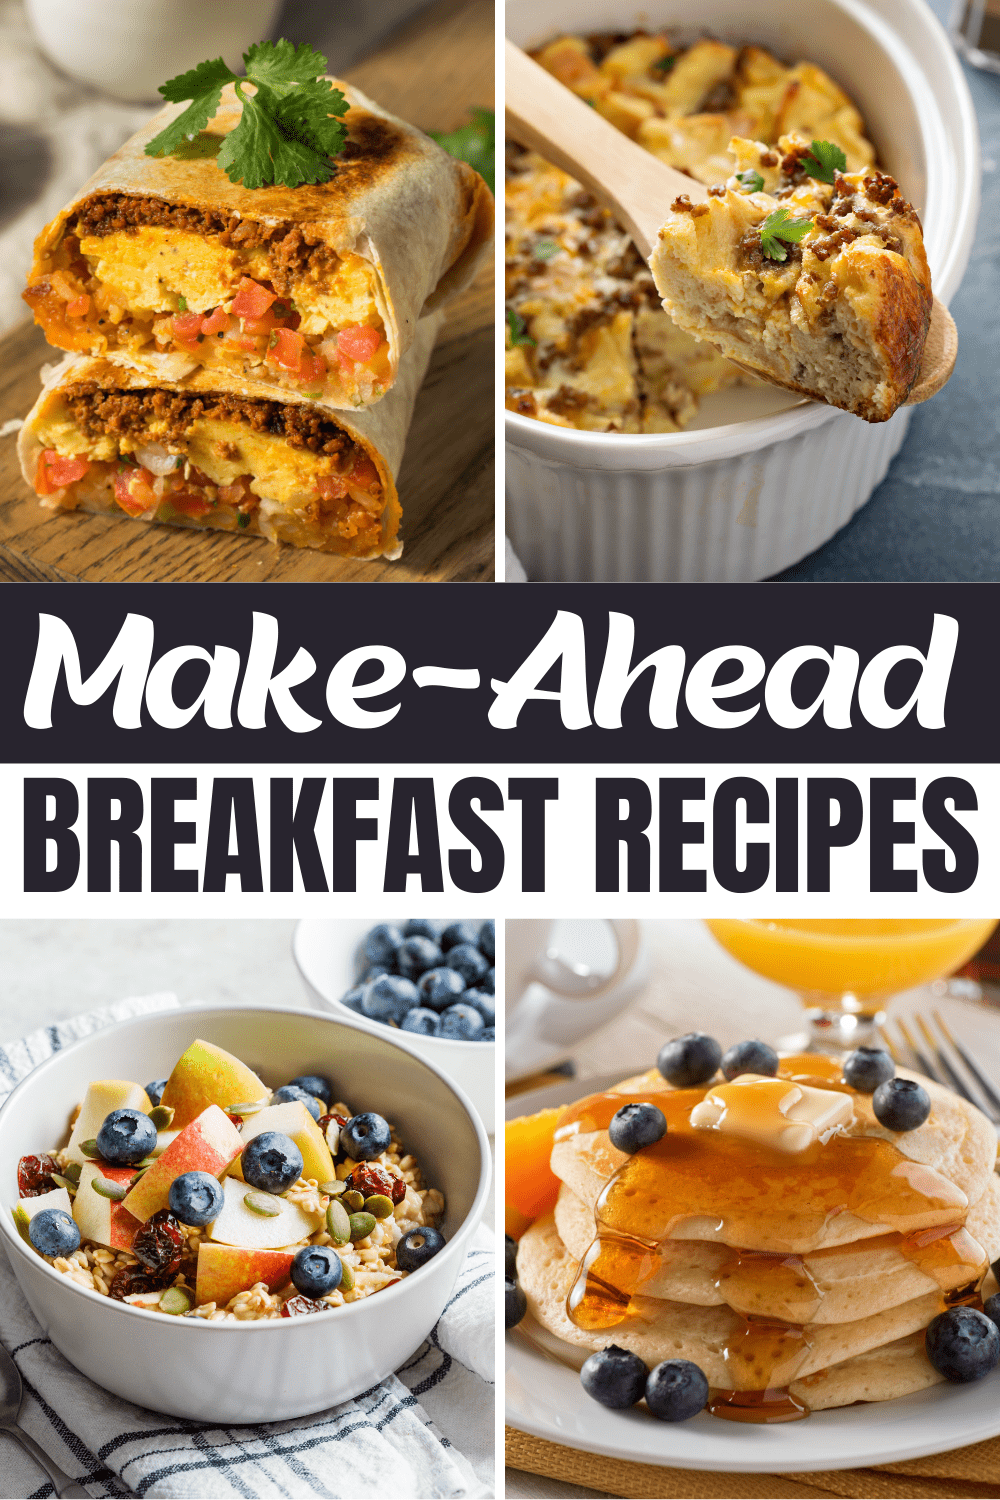 25 Best Make-Ahead Breakfast Recipes - Insanely Good